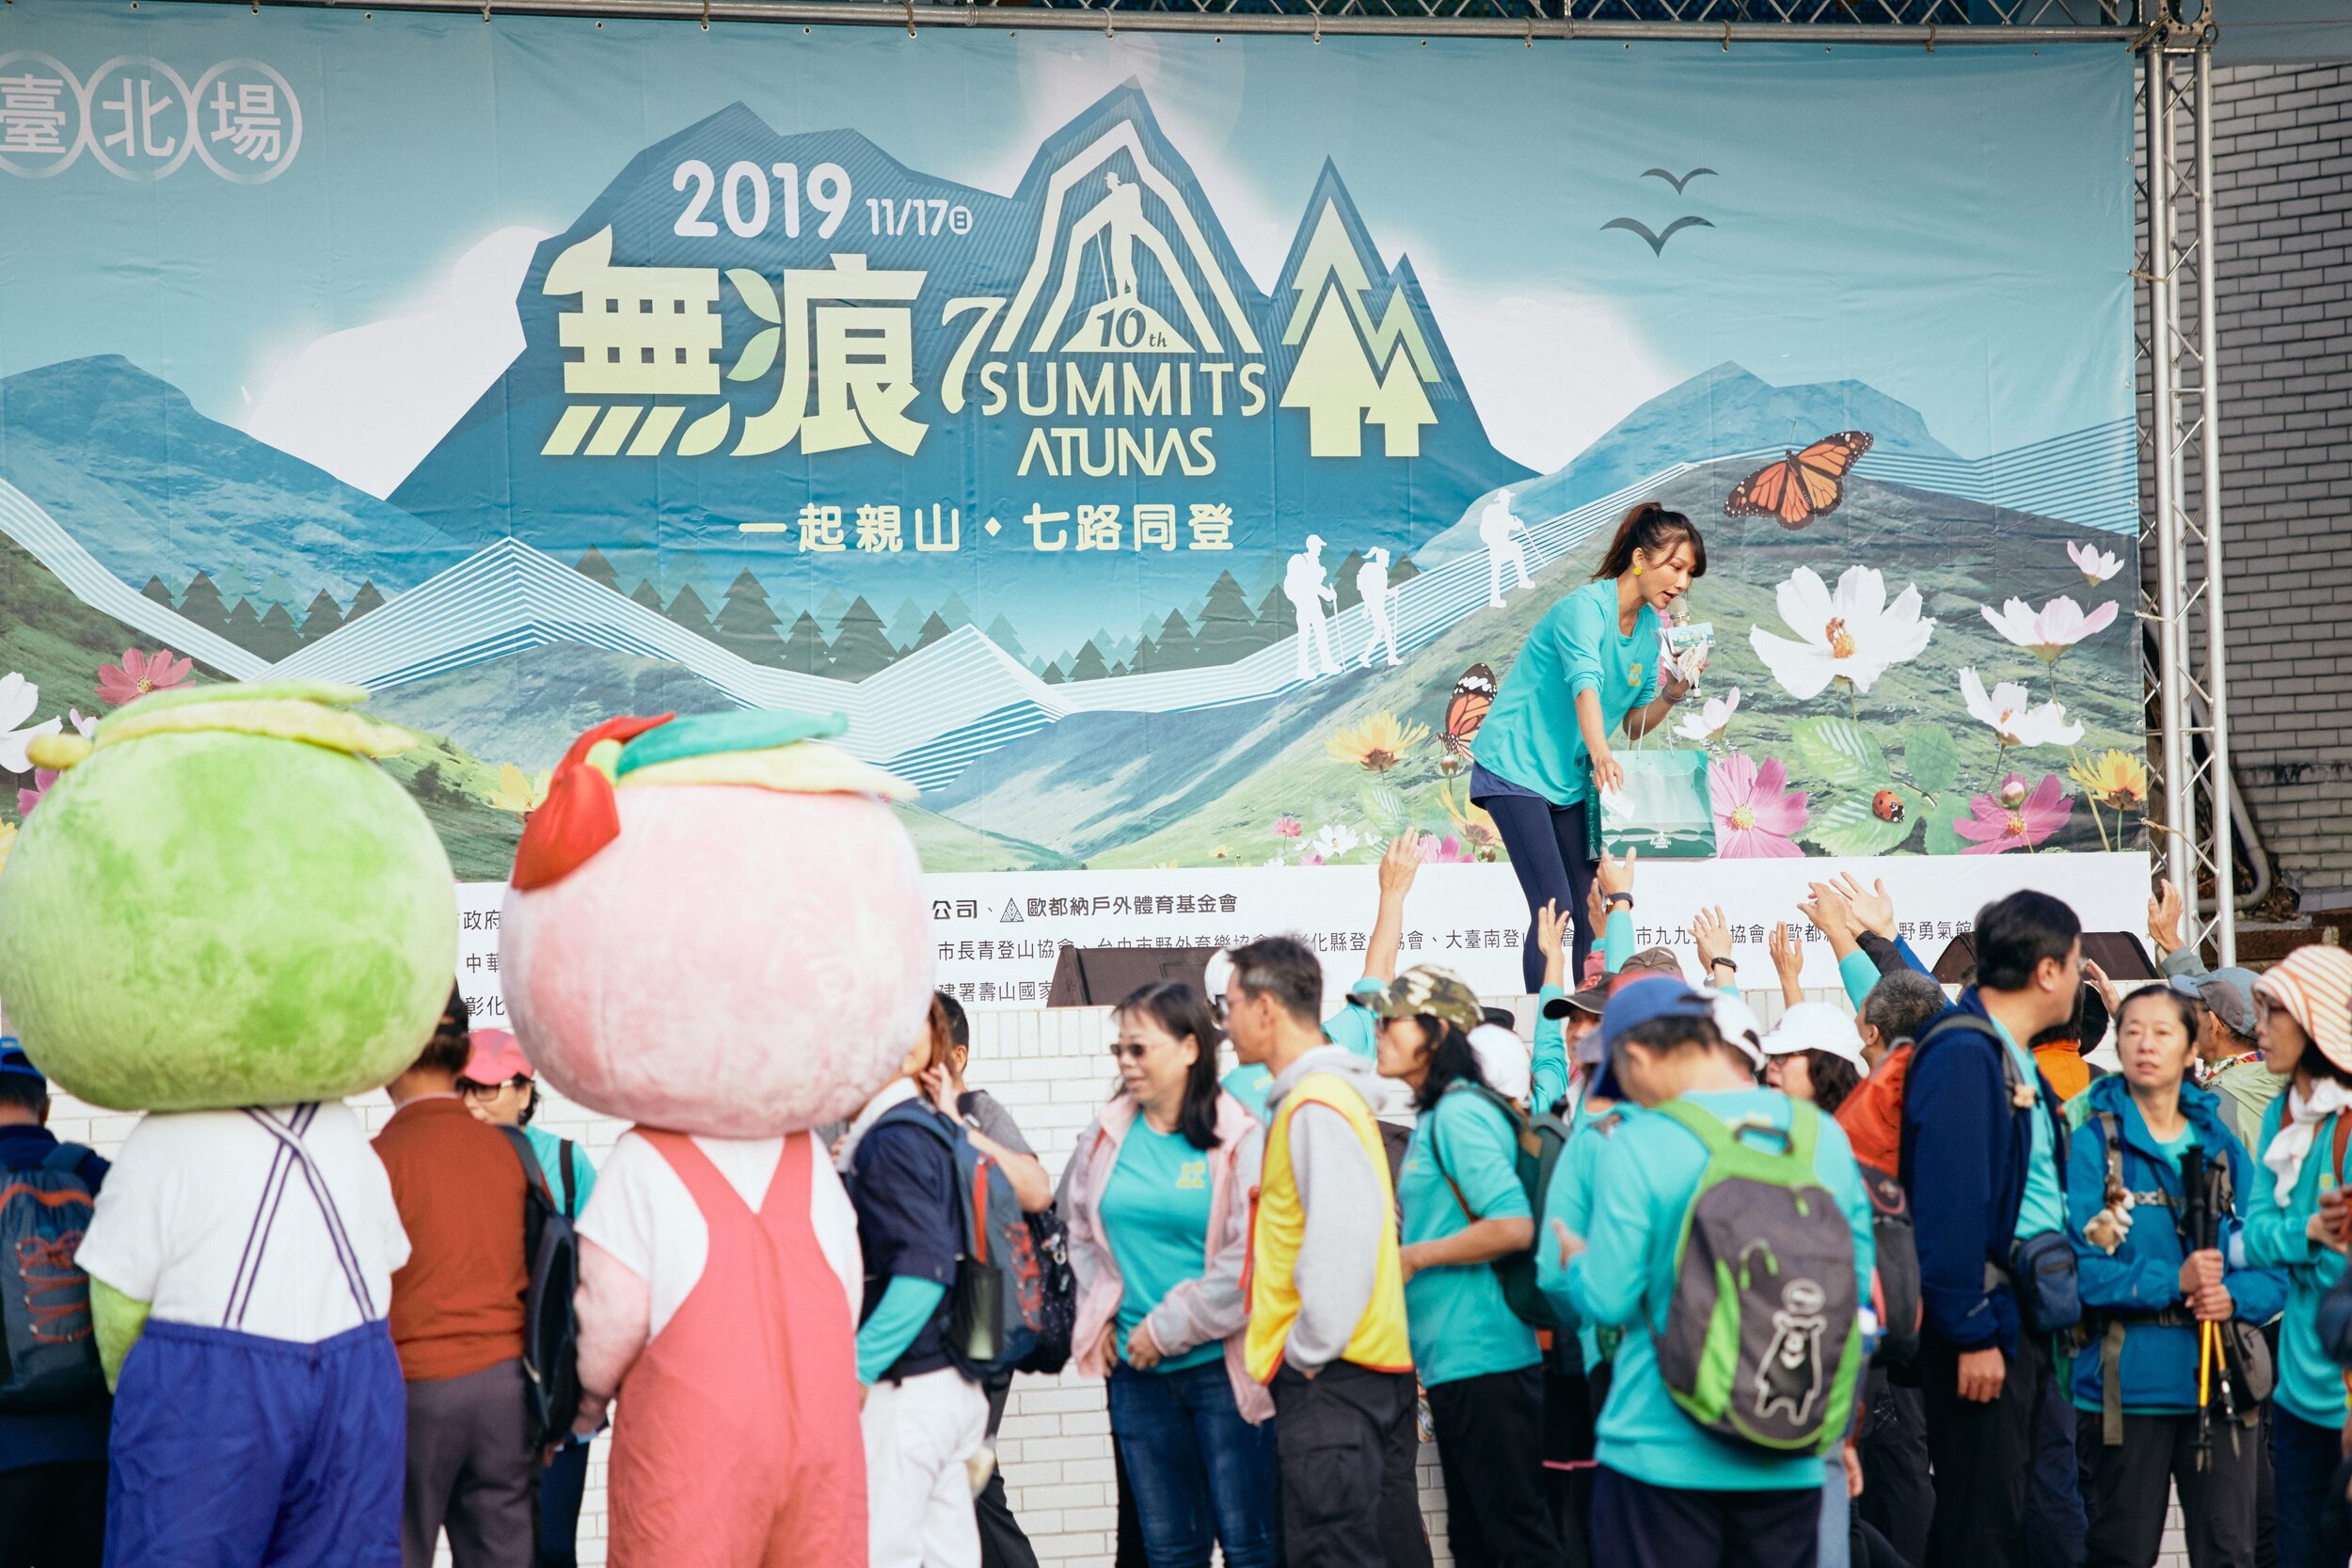 20191117-events-atunas-hiking-taipei-歐都納-無痕山林-永春高中-台北場_03.jpg